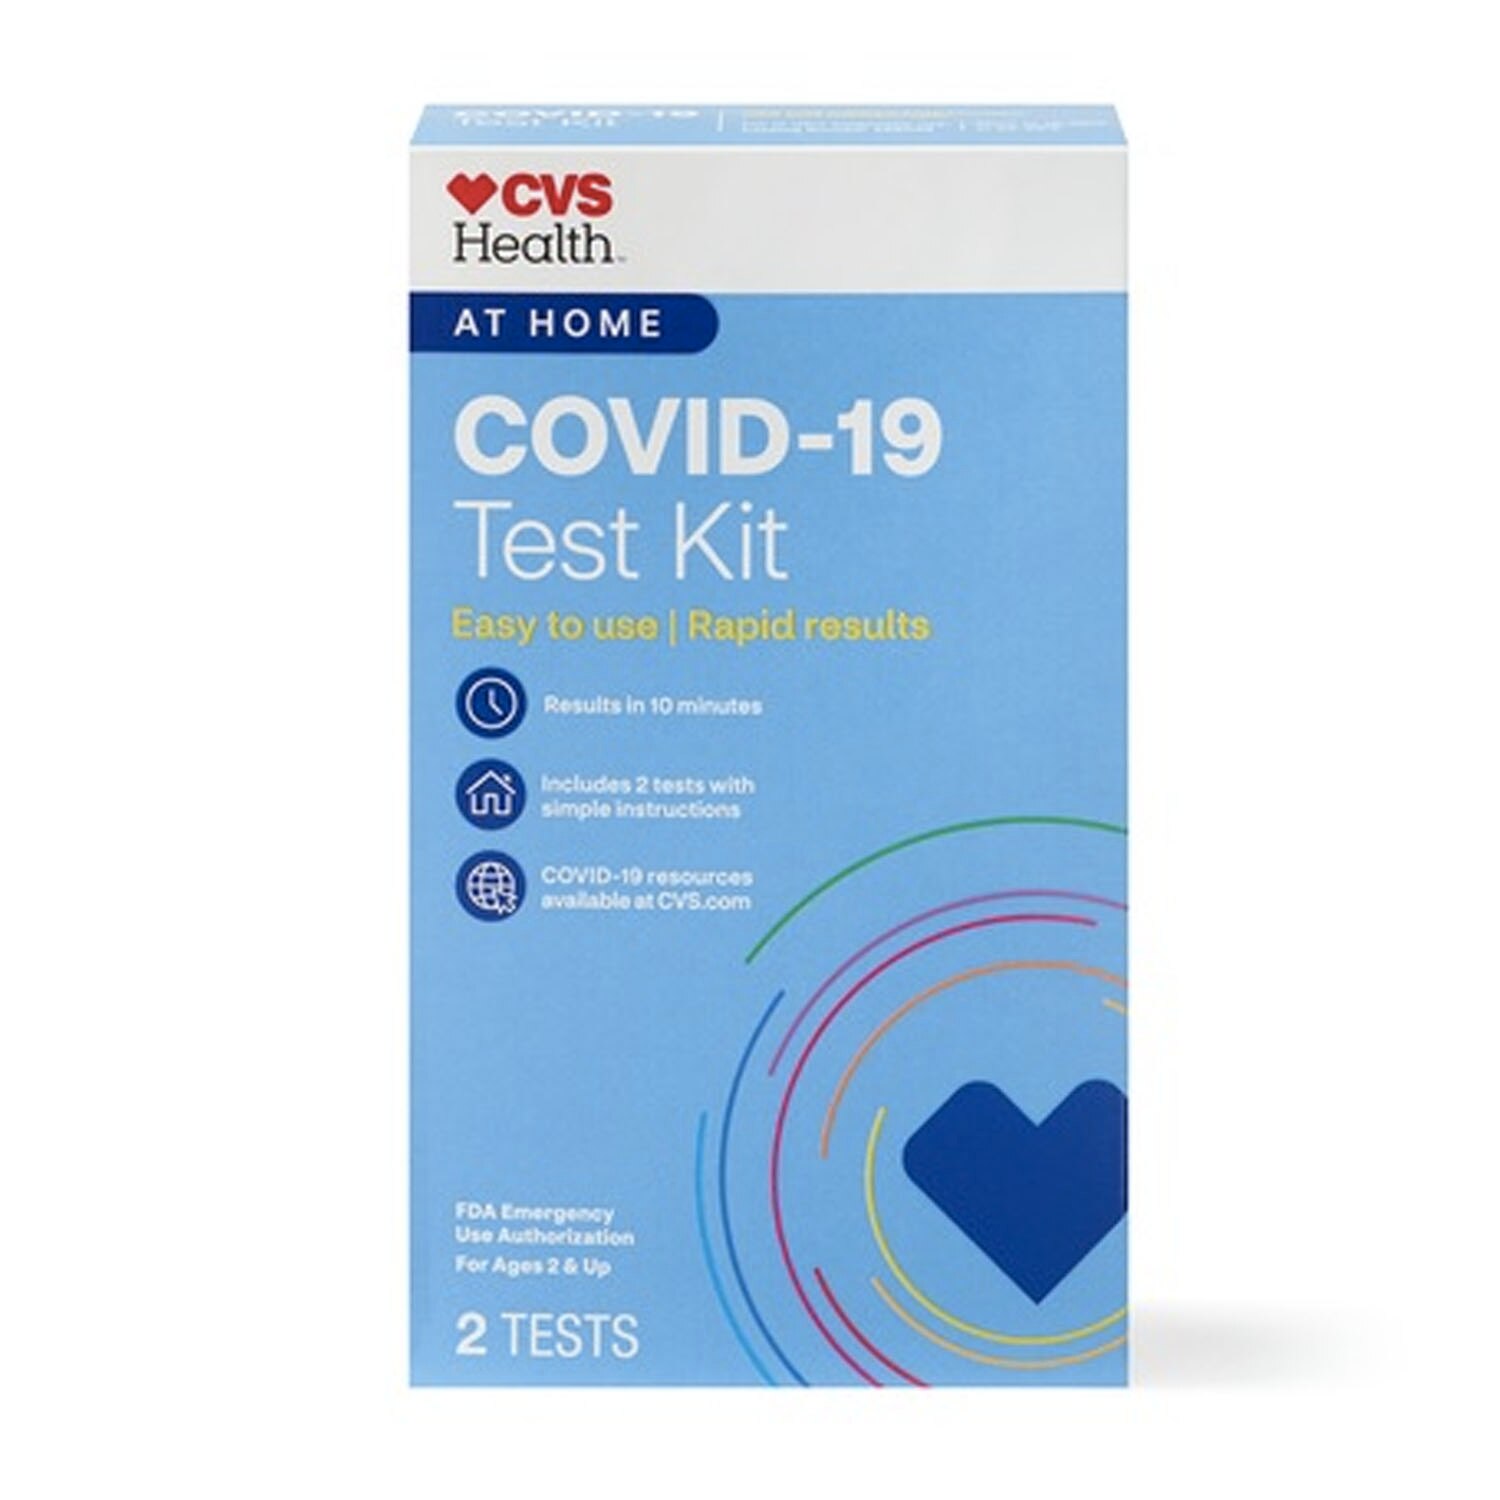  Health Test Kit